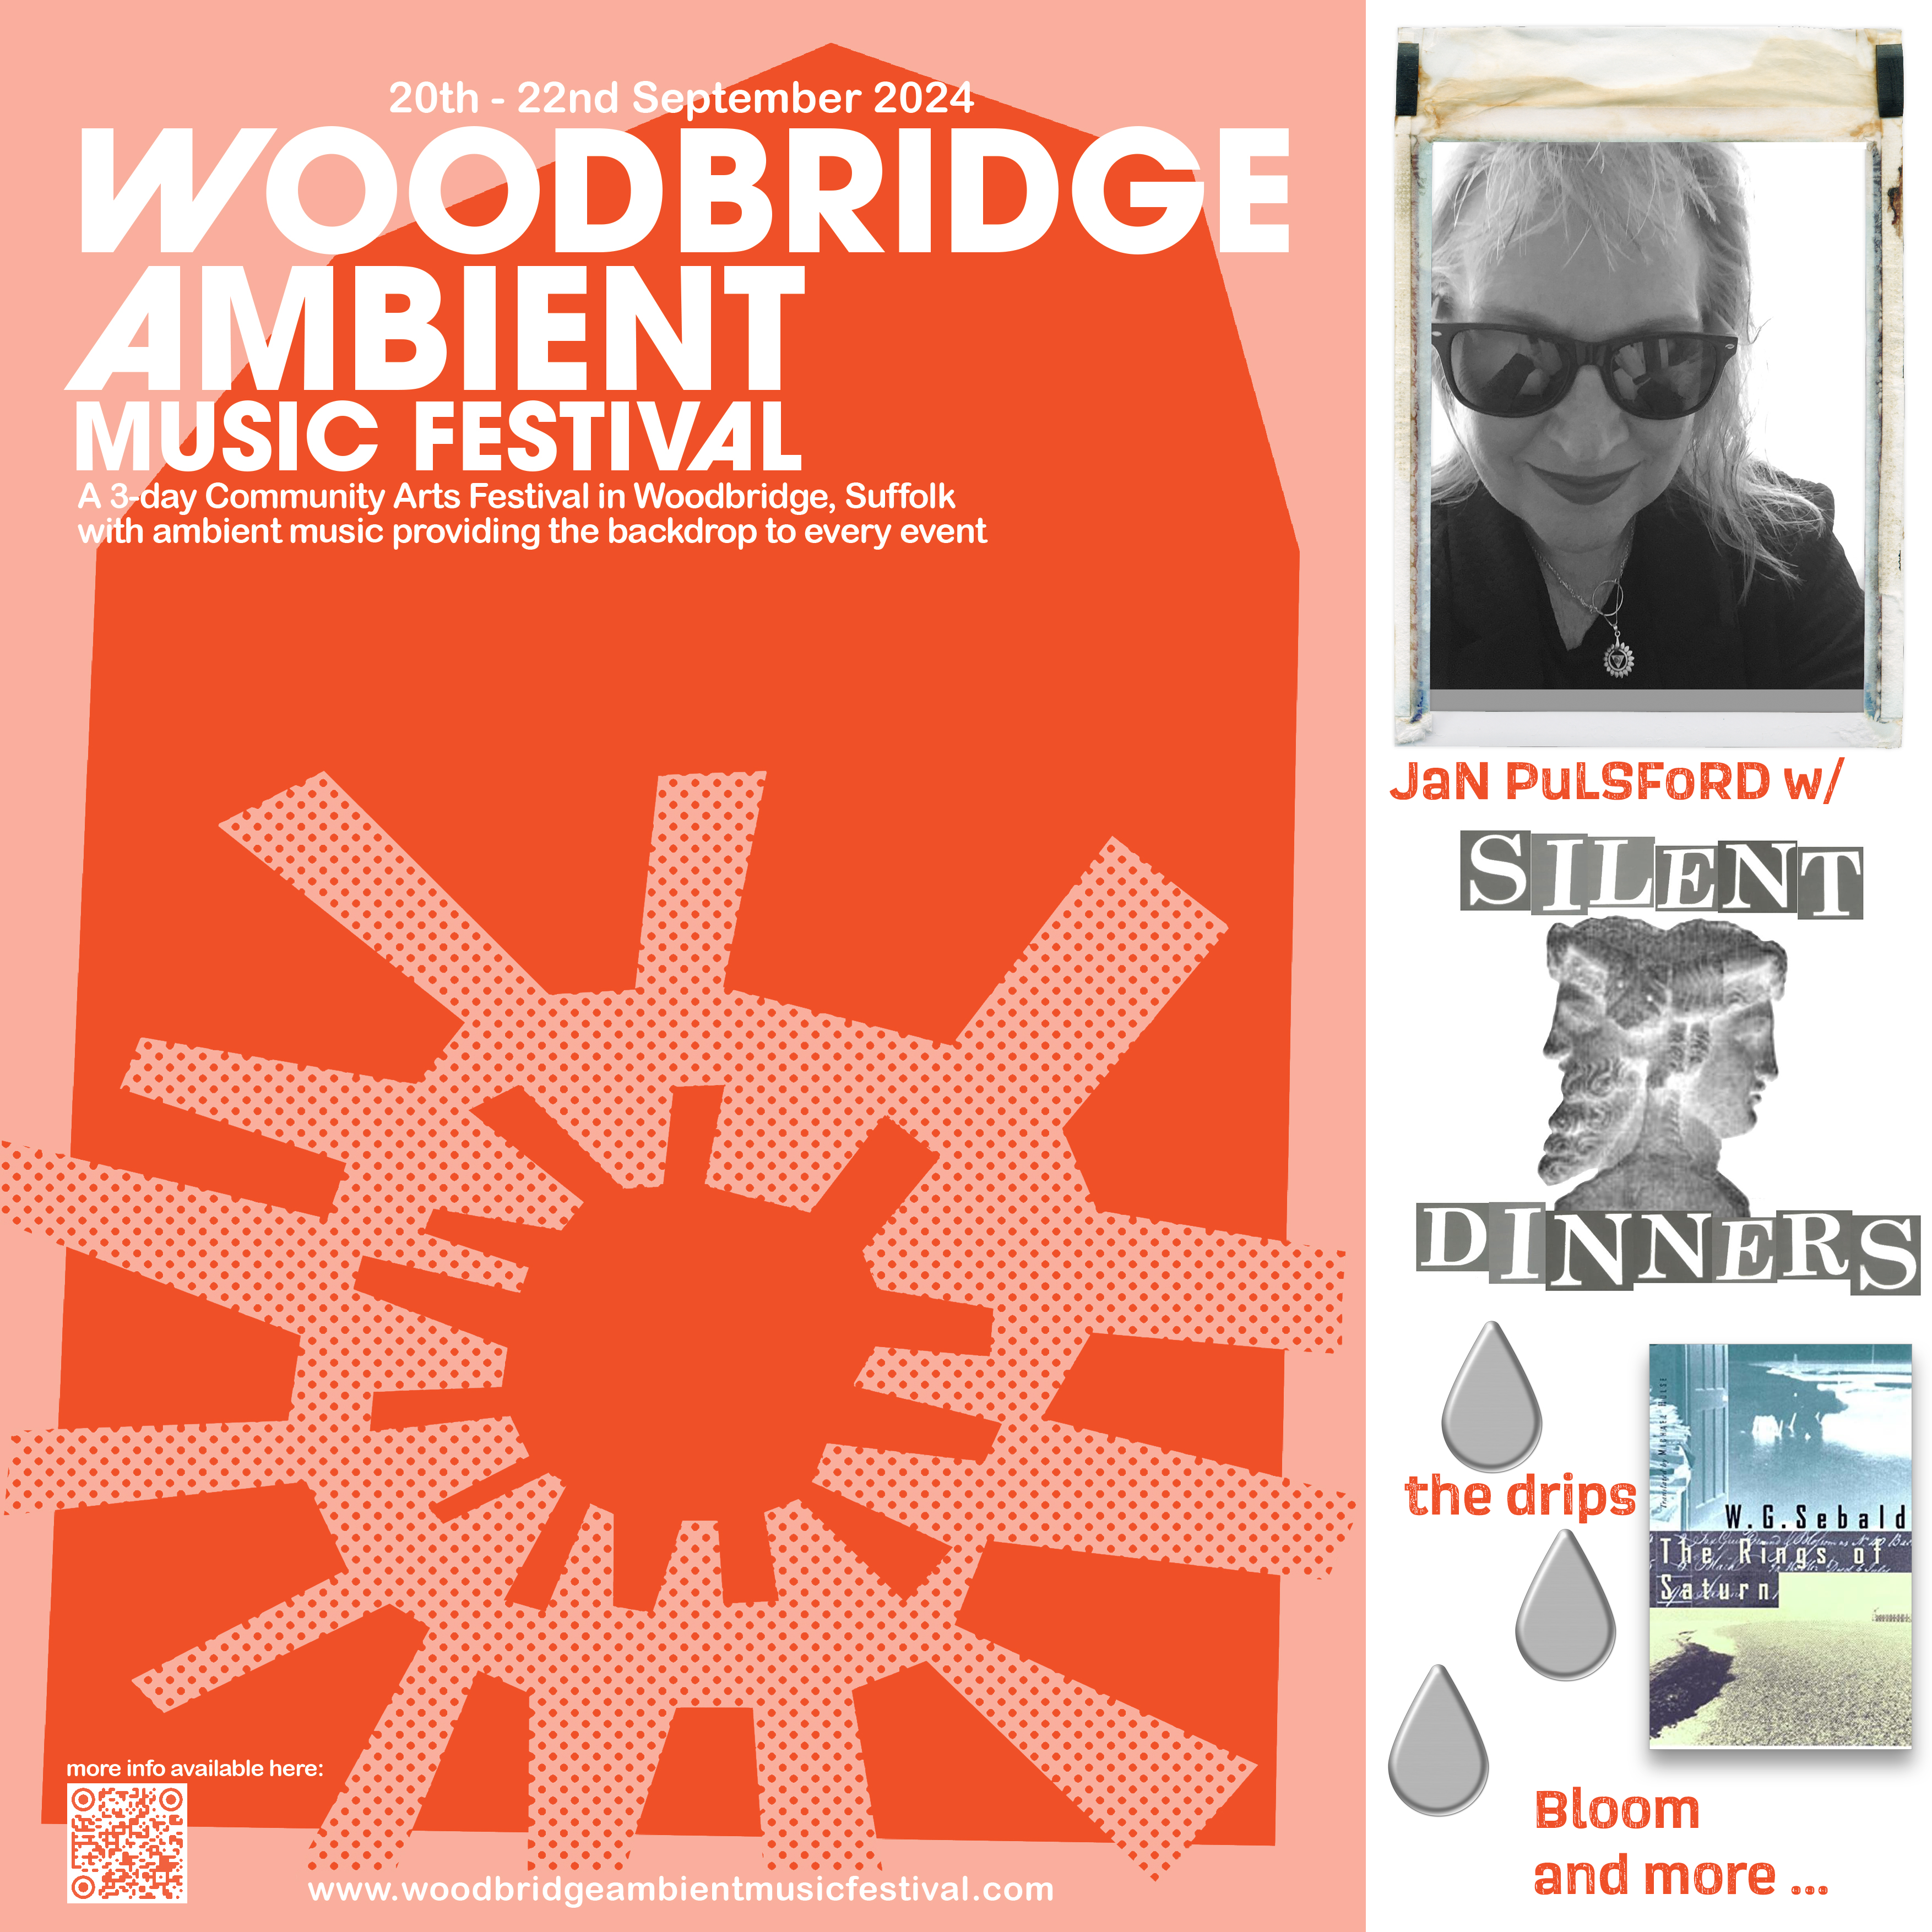 Woodbridge Ambient Music Festival C. Jan Pulsford